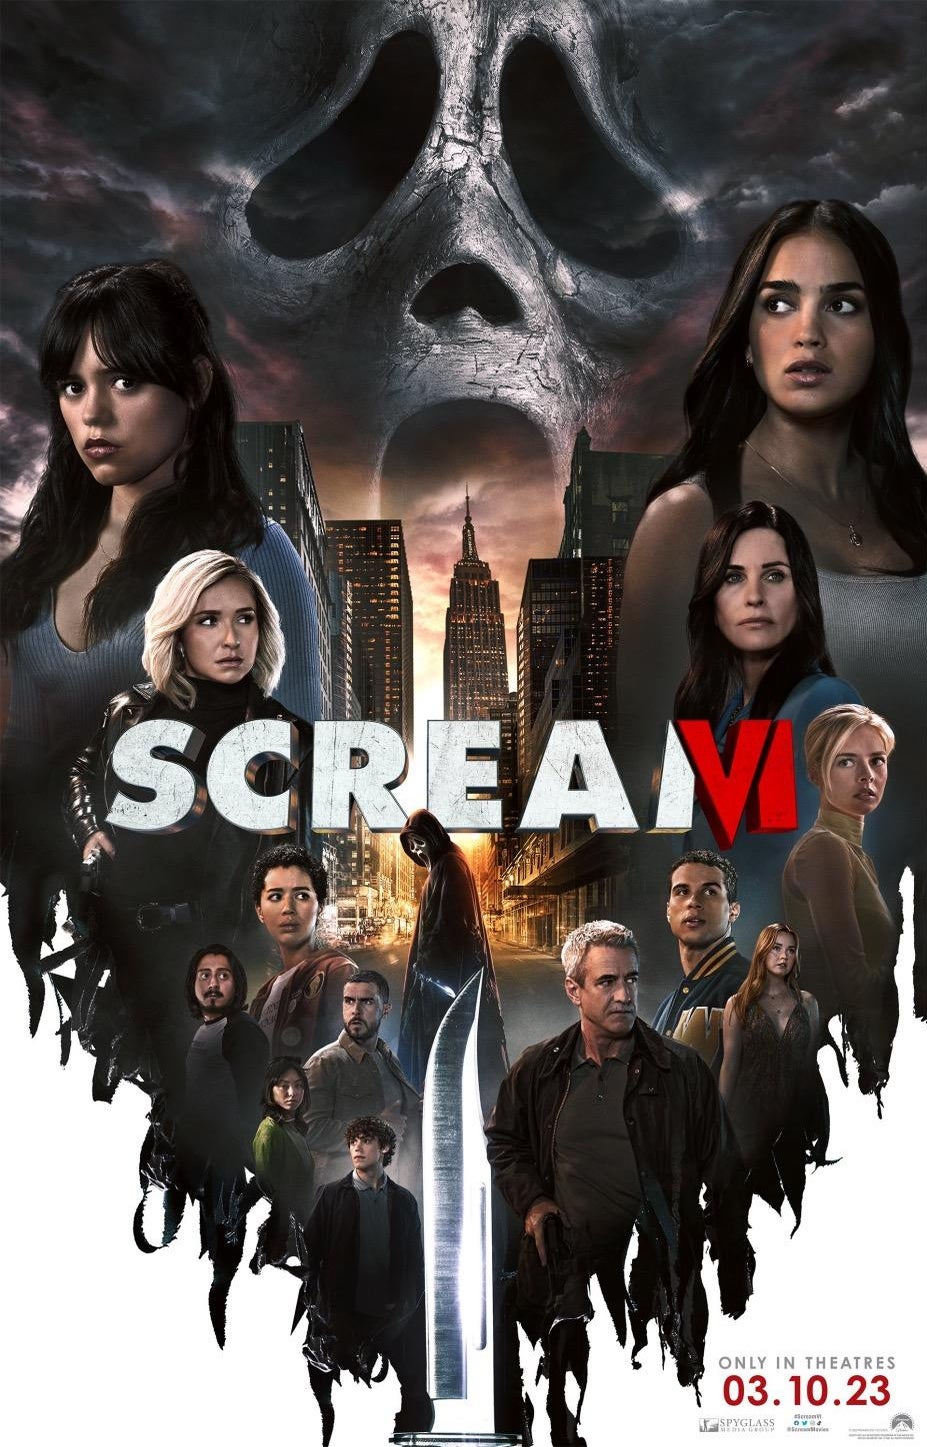 scream-6-cast-poster.jpg